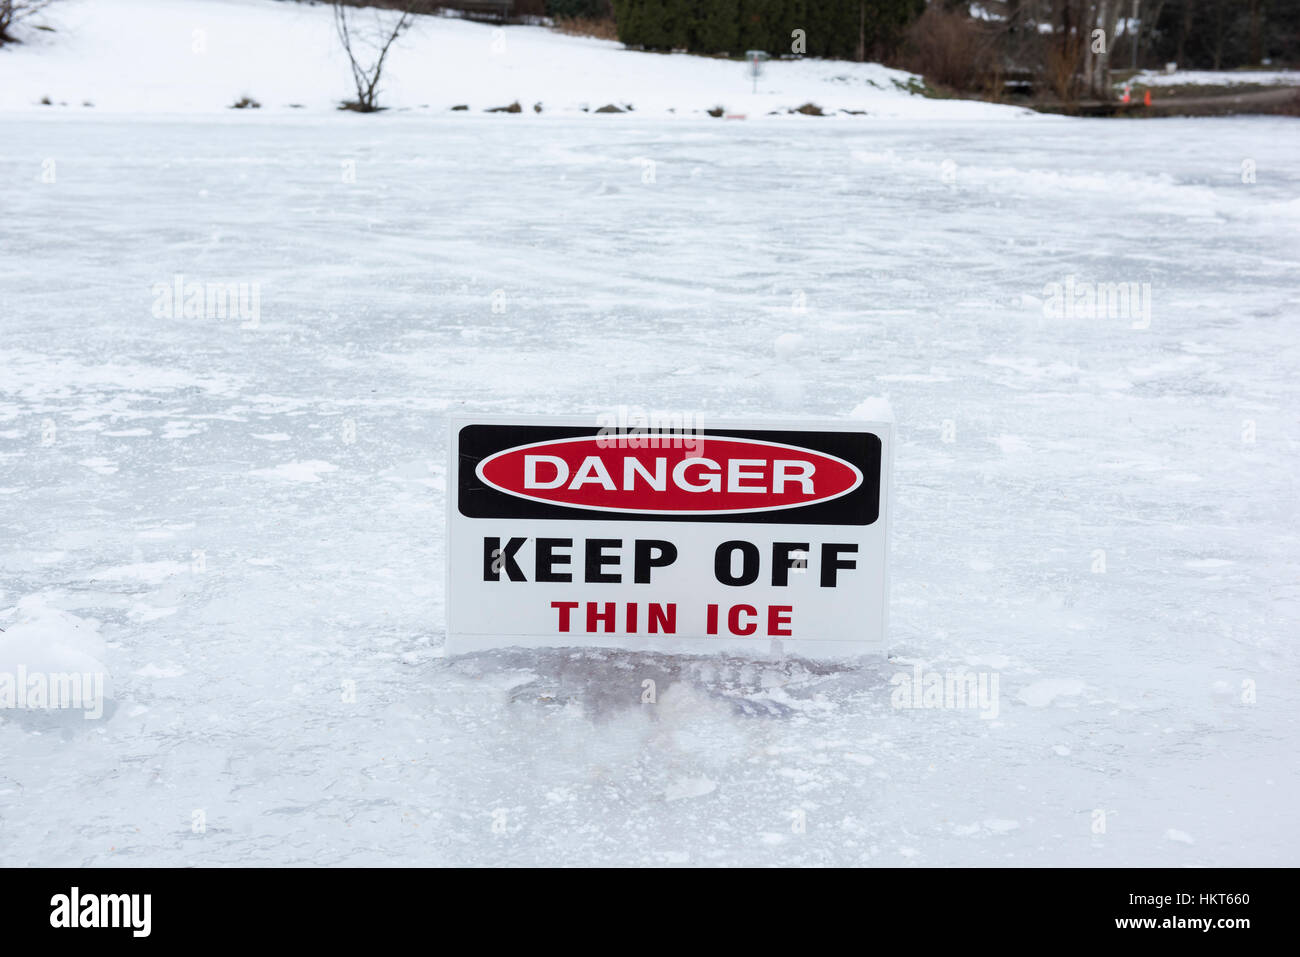 Danger sign warning of thin ice. Stock Photo